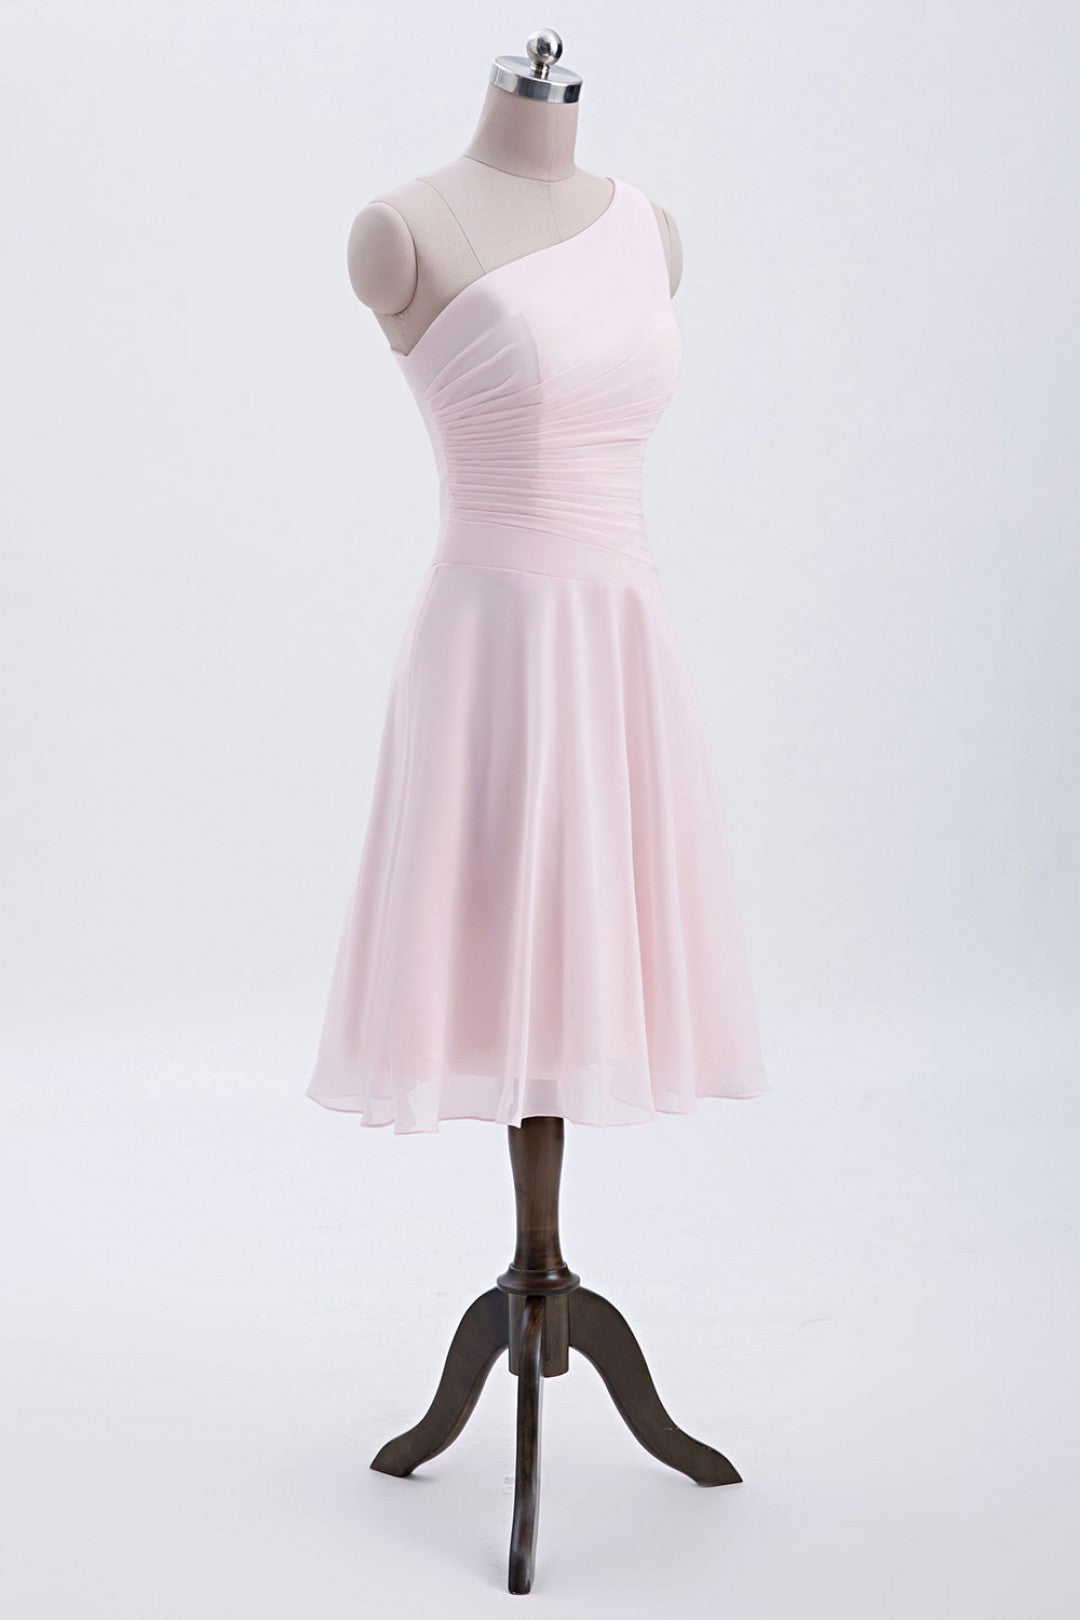 Short Pink One Shoulder Chiffon Homecoming Dress